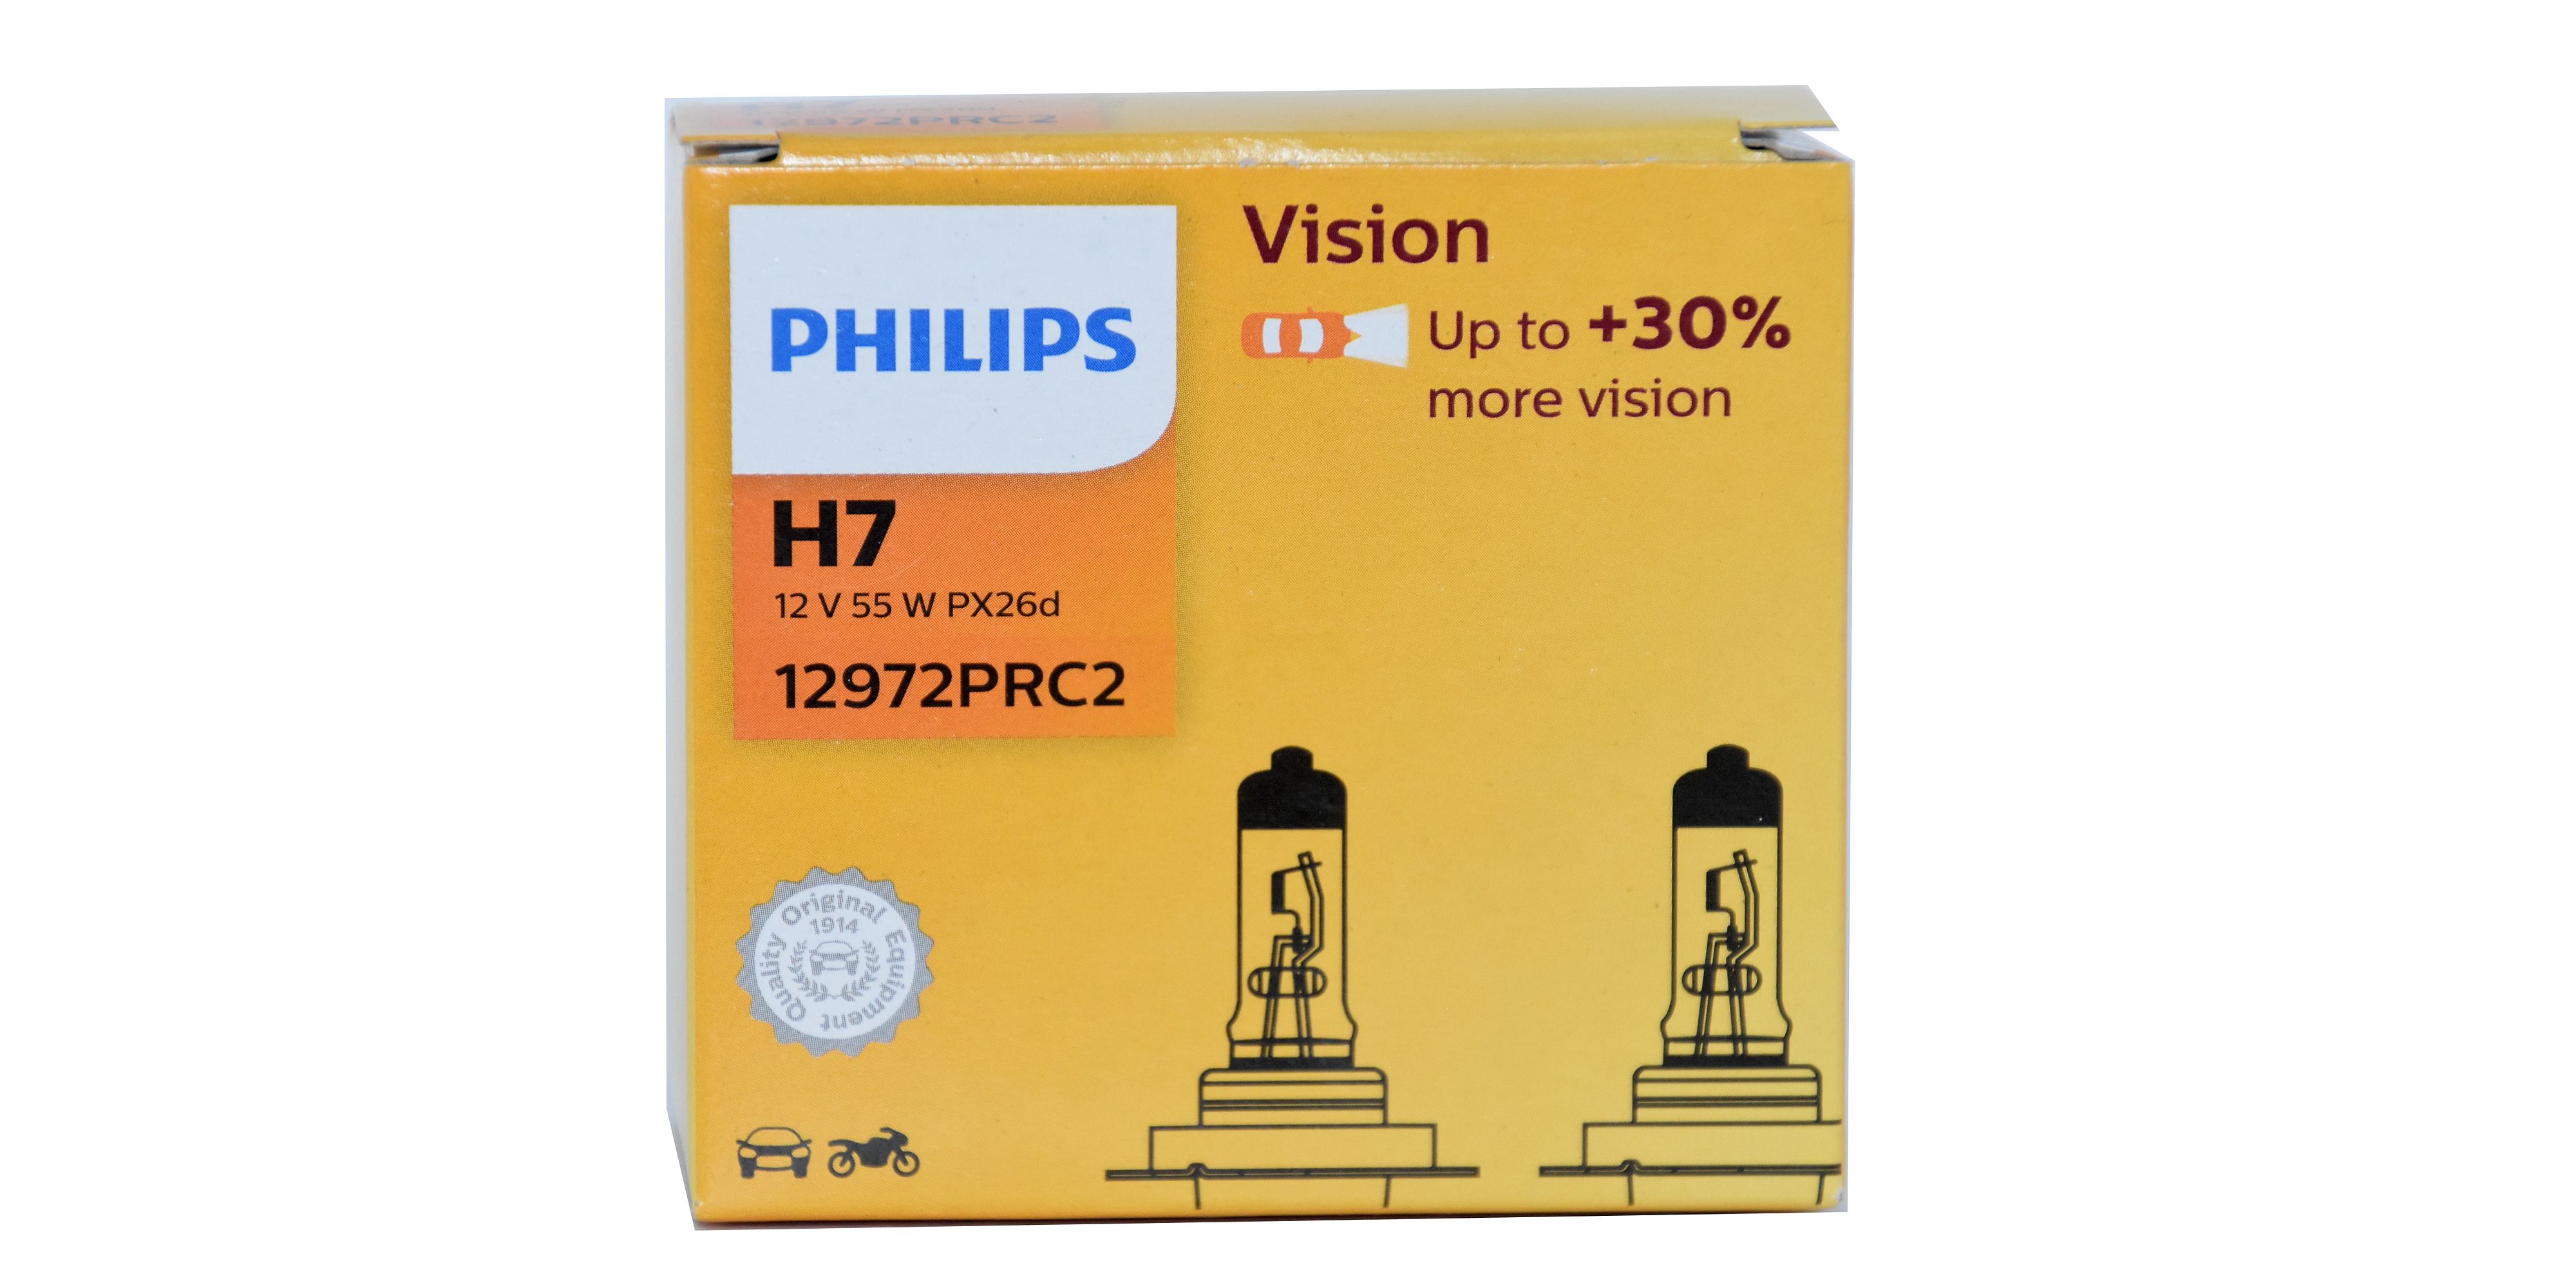 Philips H7 Vision Halogen Lampen 12972PRC2 Duo Set